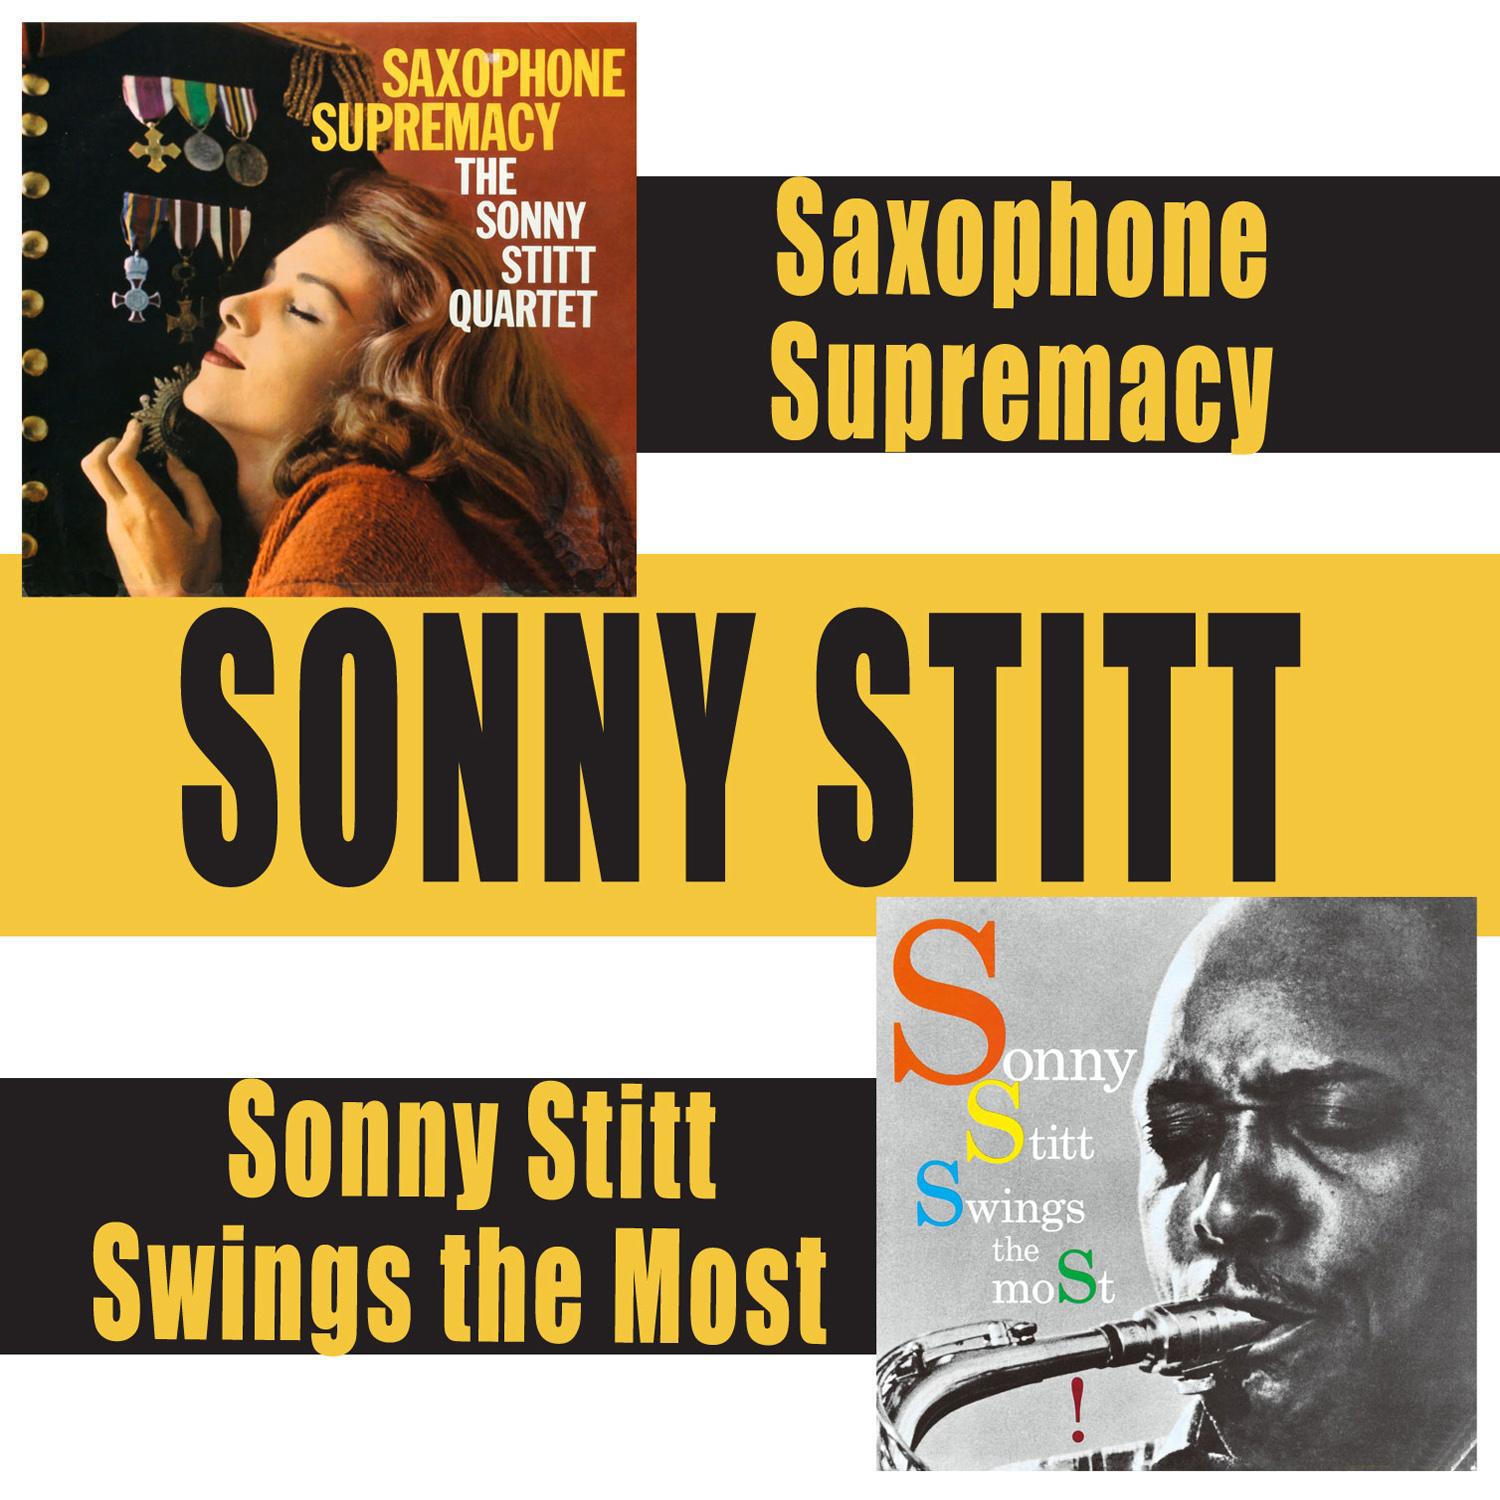 Saxophone Supremacy + Sonny Stitt Swings the Most专辑